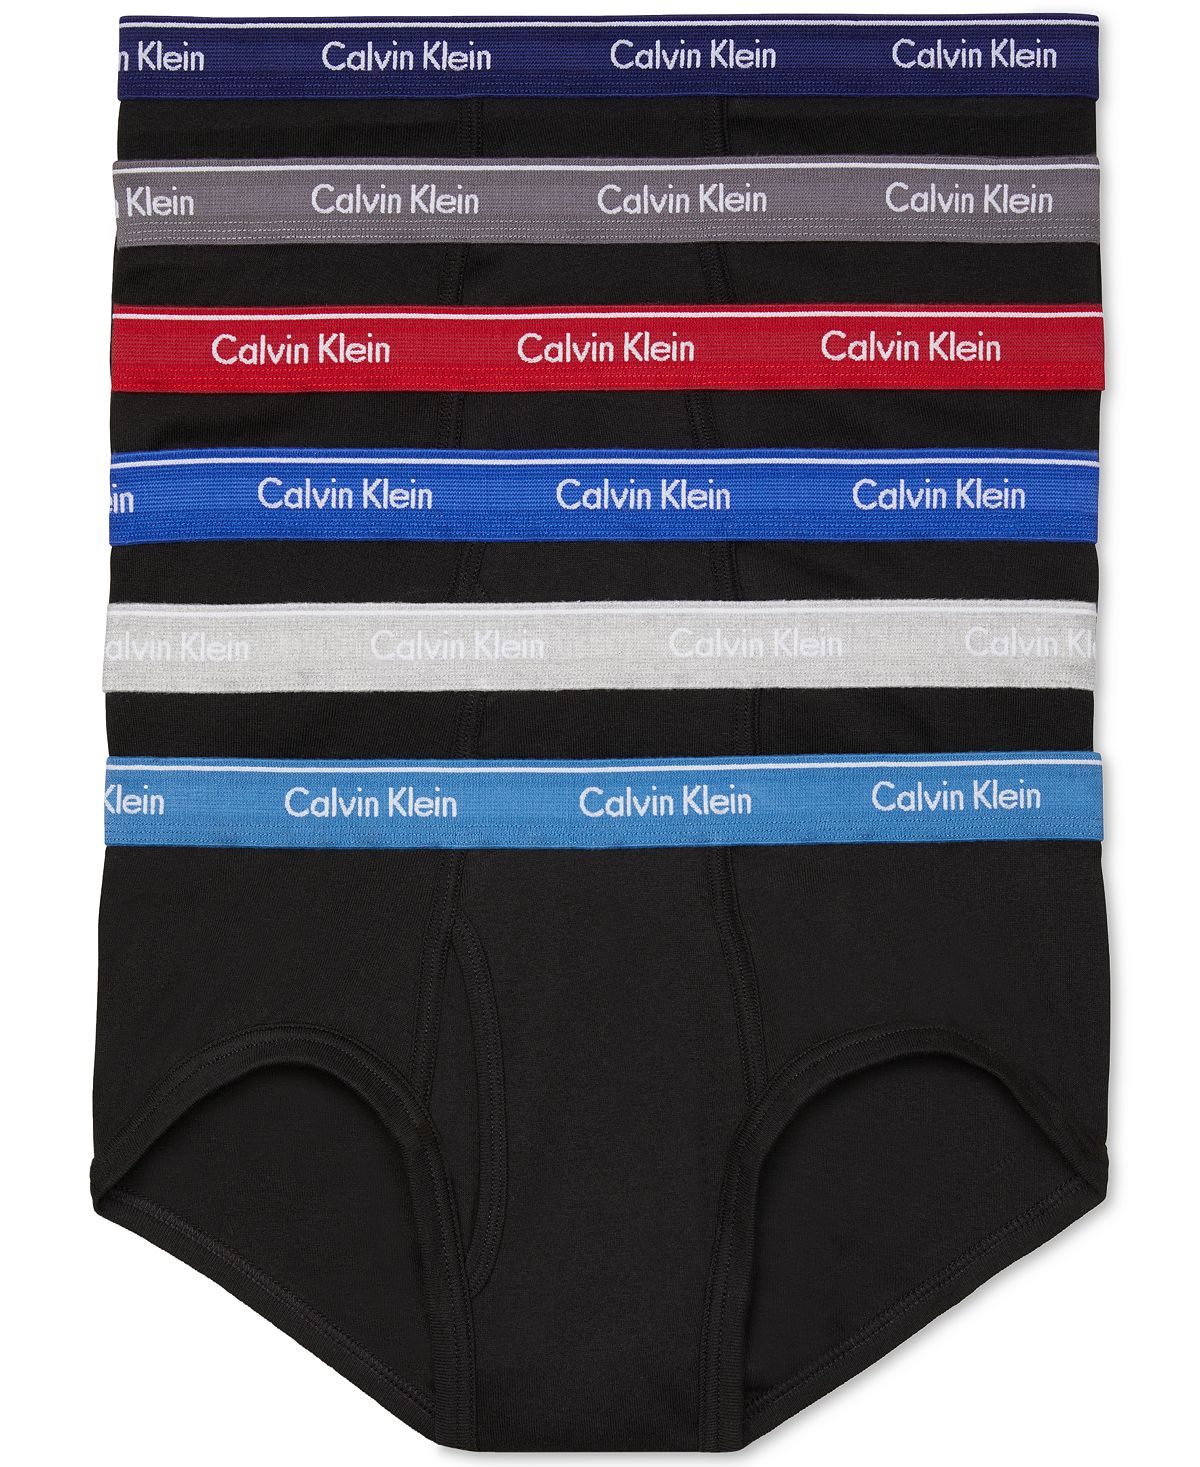 Calvin Klein 6-pk. Cotton Classic Briefs Black/Grey Smoke